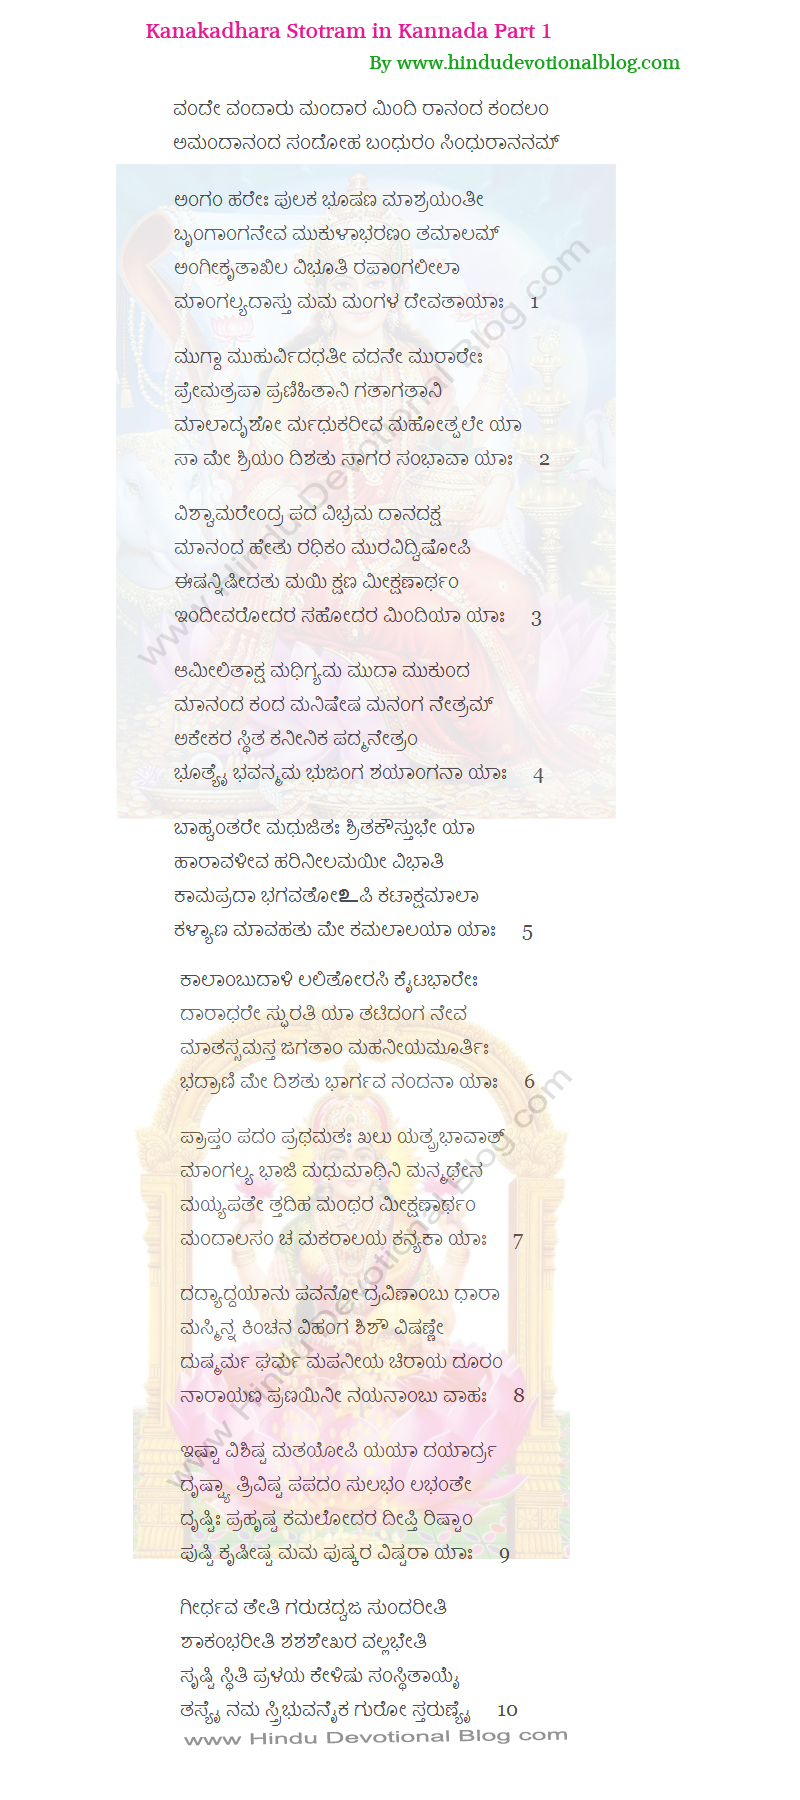 Picture of Kanakadhara Stotram Lyrics in Kannada Language - Free download from Hindu Devotional Blog